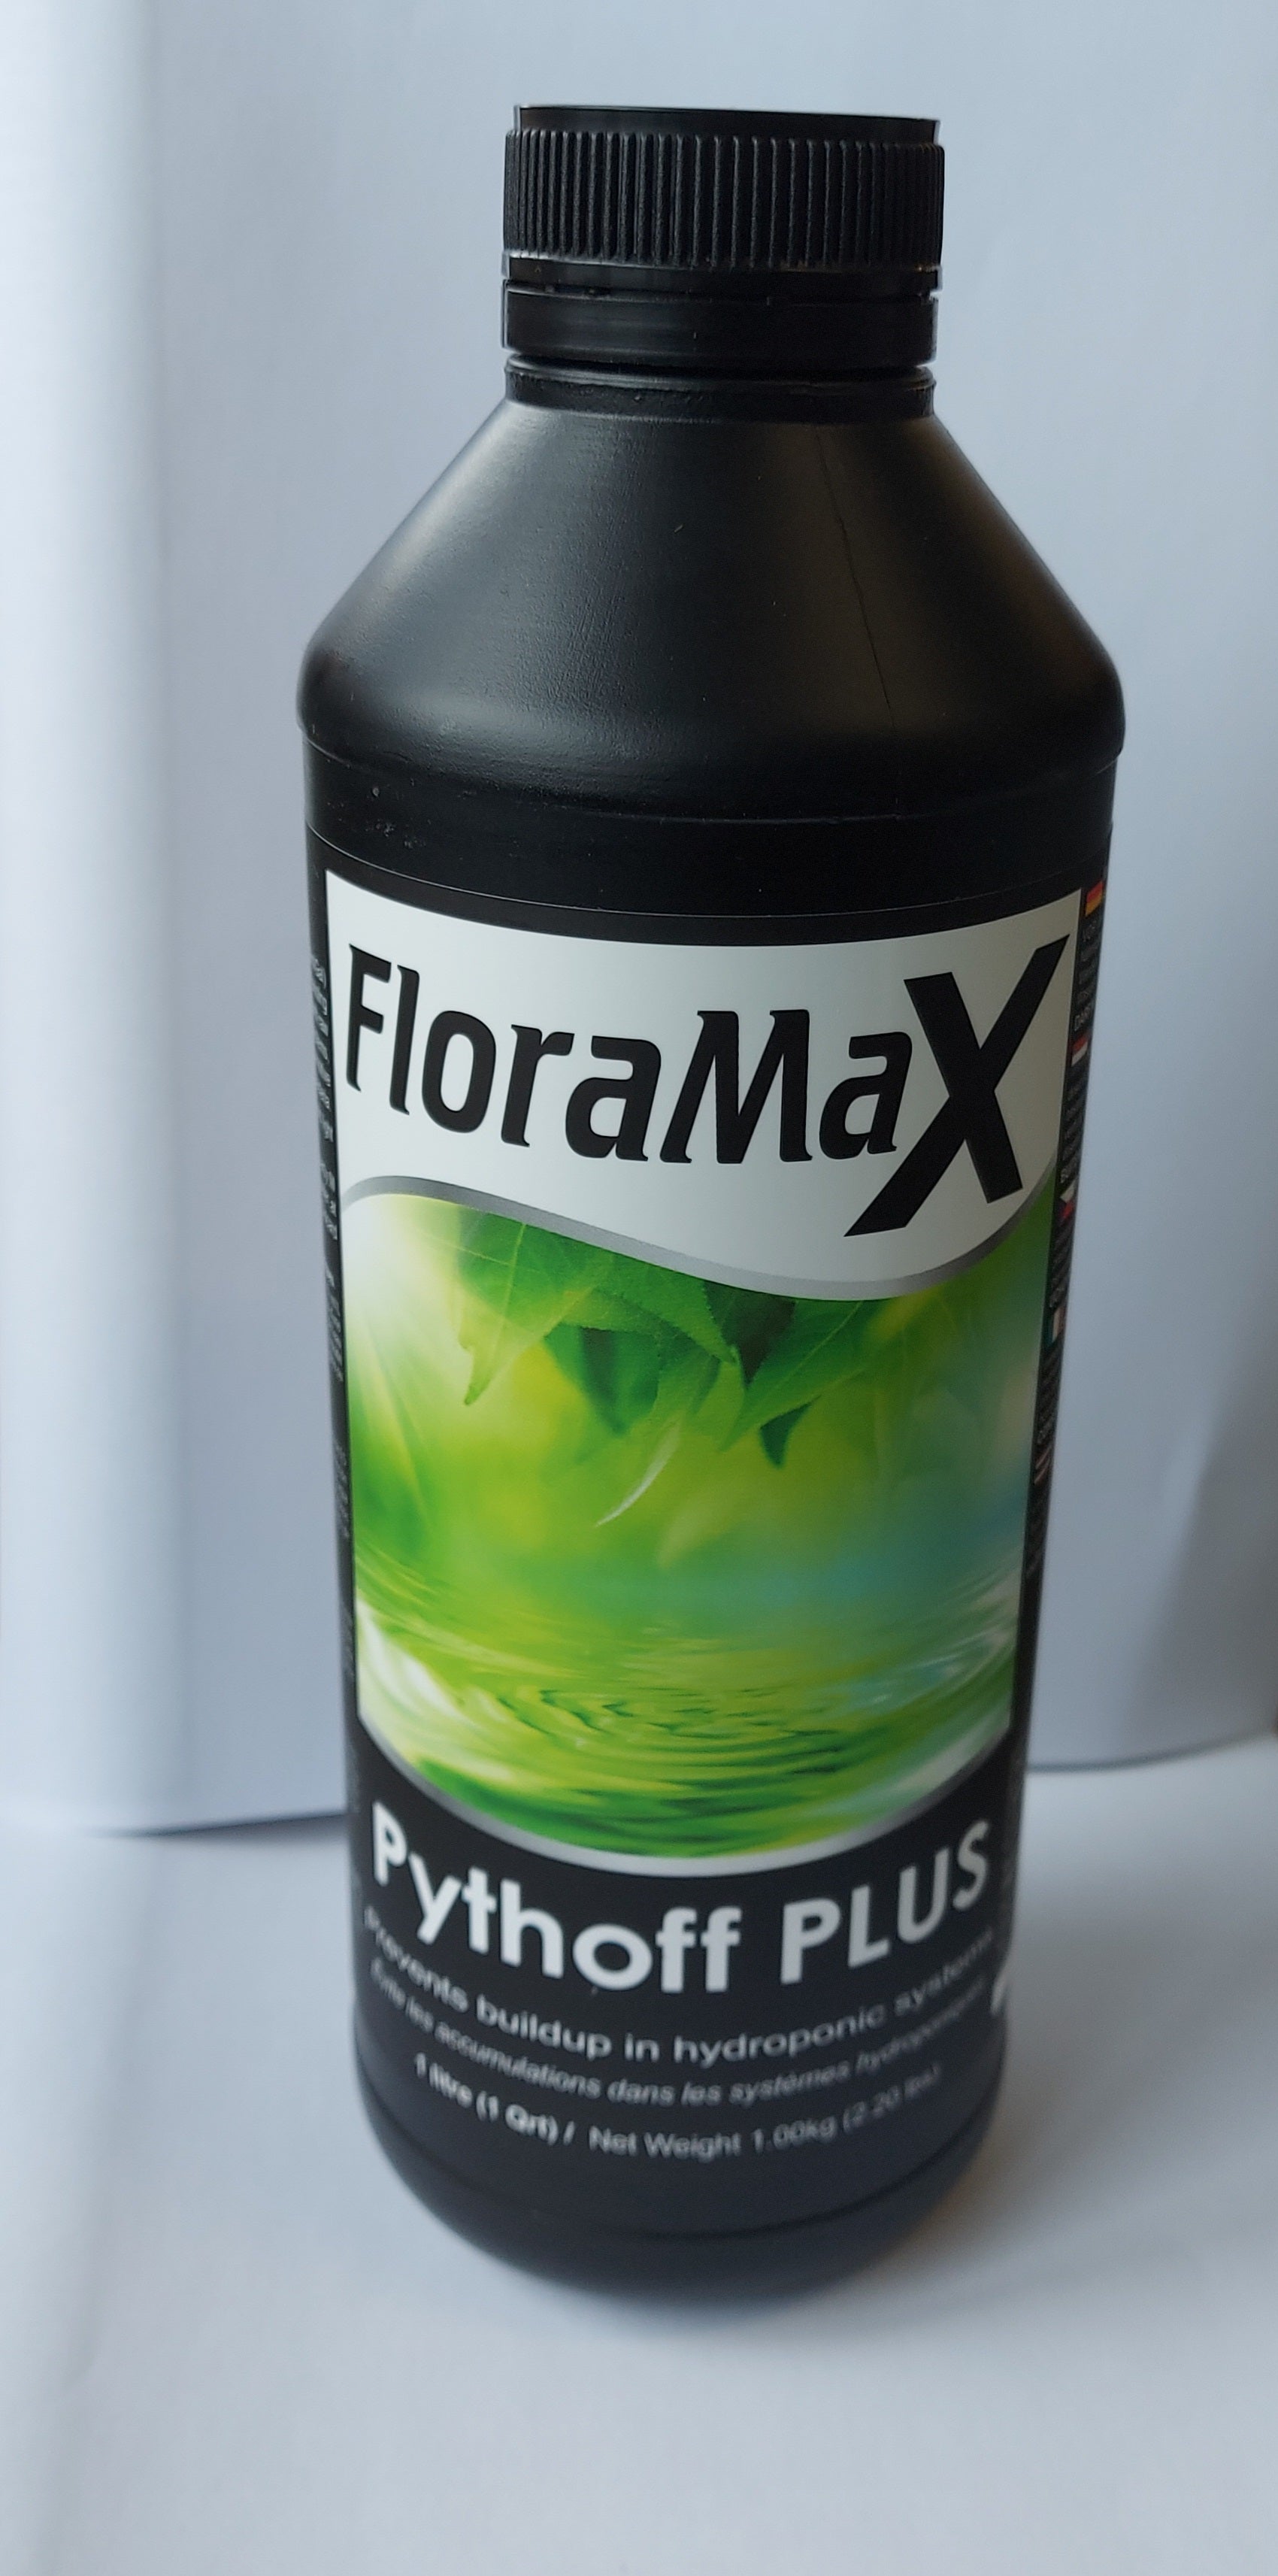 Floramax Pythoff Plus